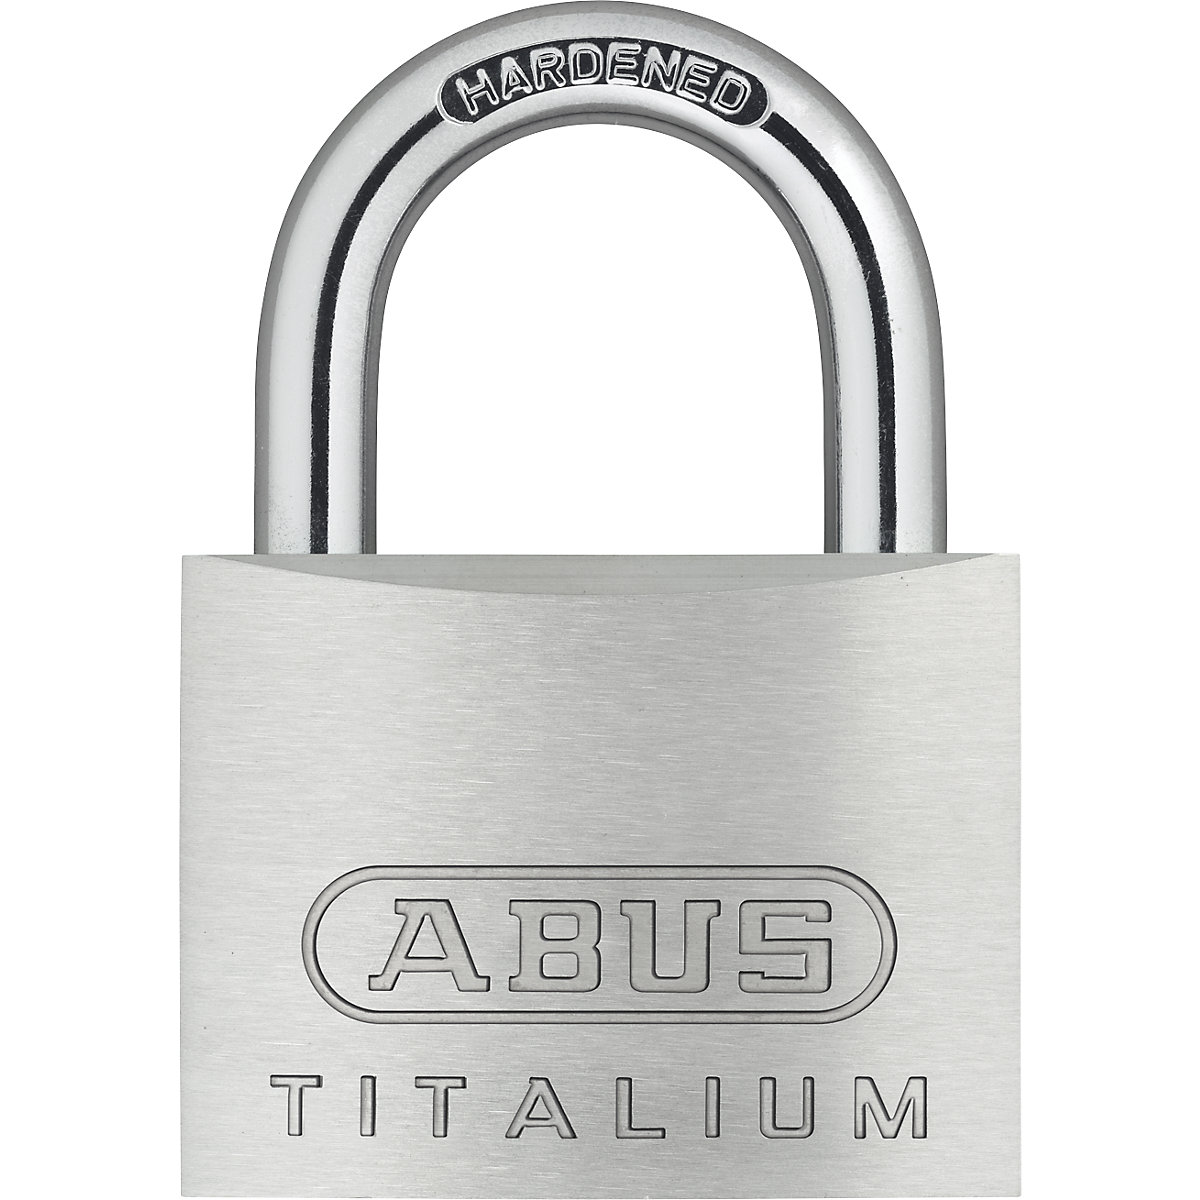 Cylinder padlock - ABUS